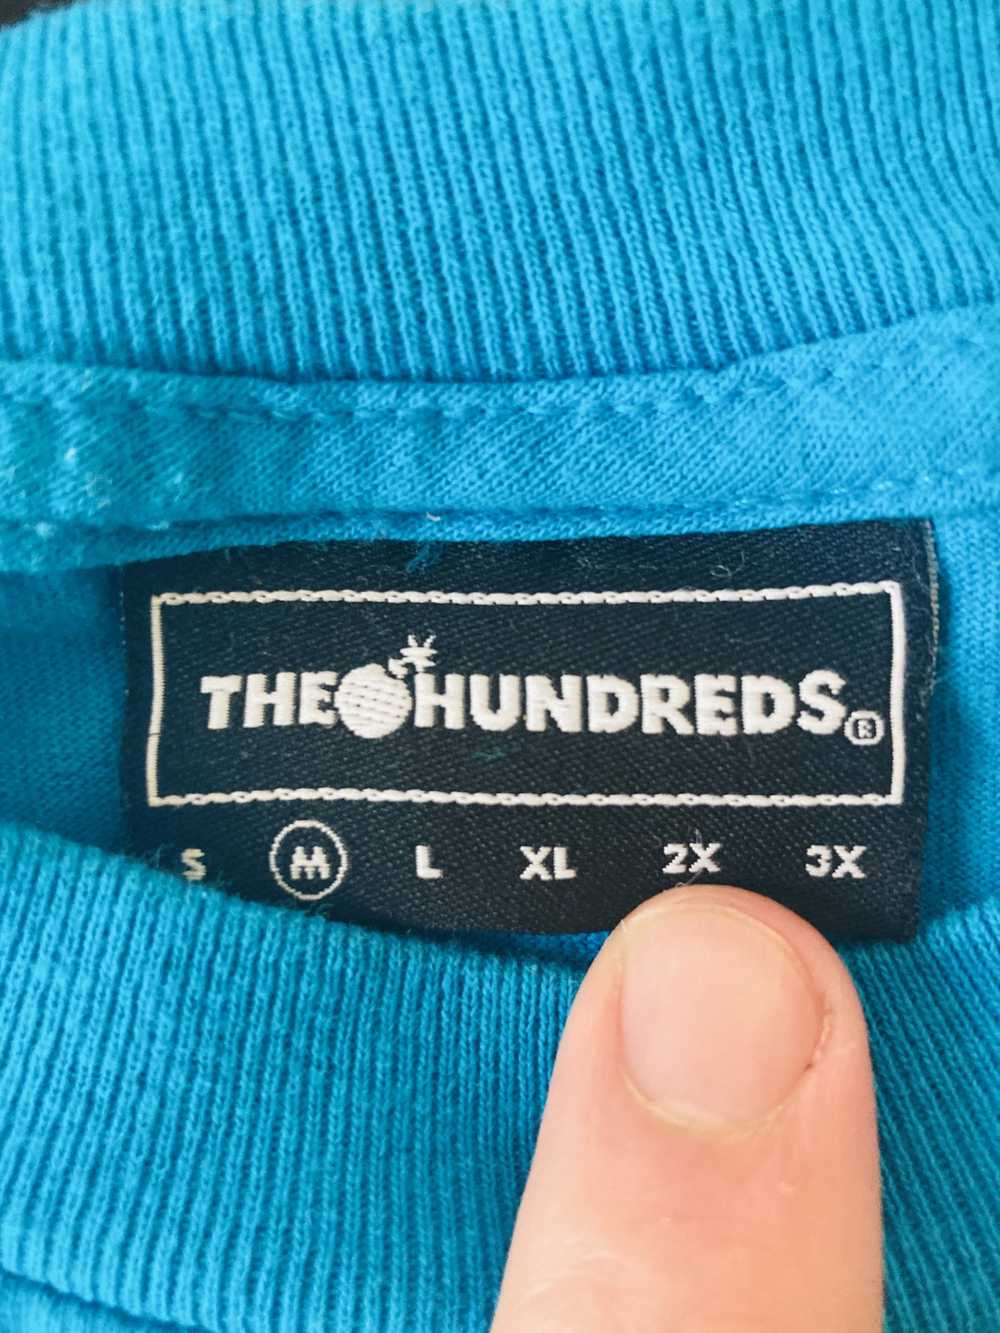 The Hundreds The Hundreds Tee Shirt - image 2